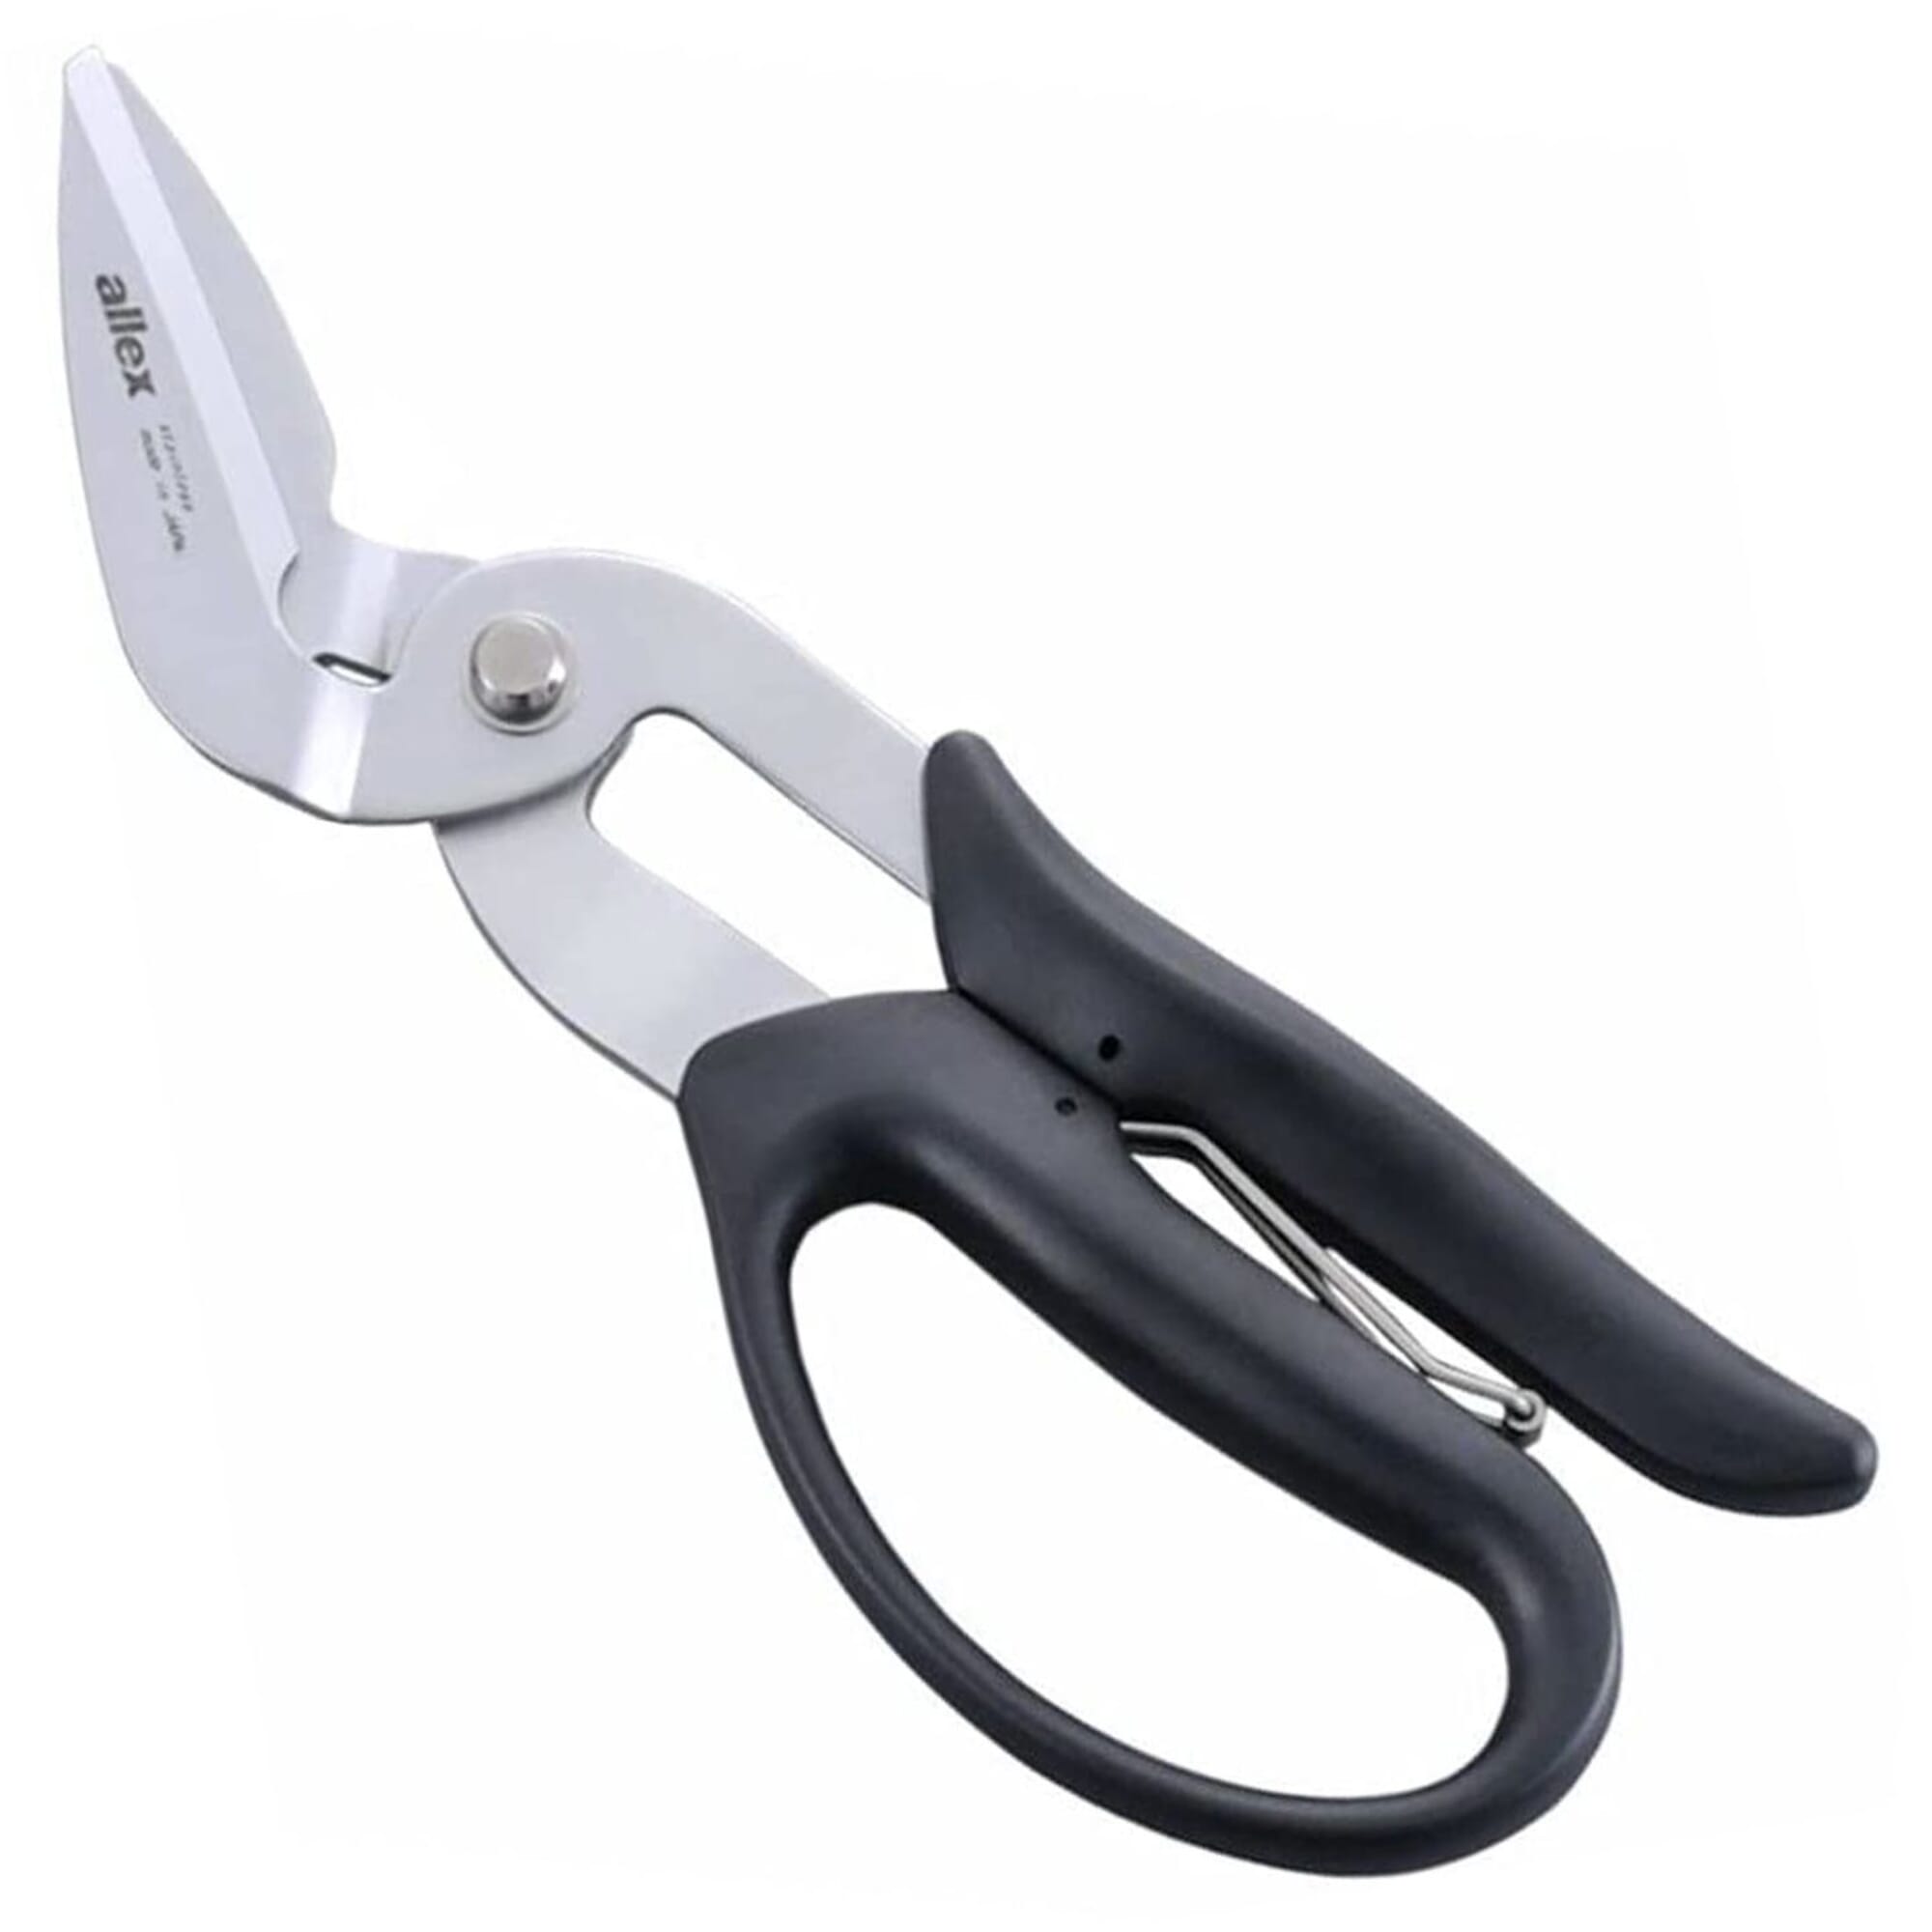 Allex Super Hard scissors/Stainless Steel Power Scissors SH-1